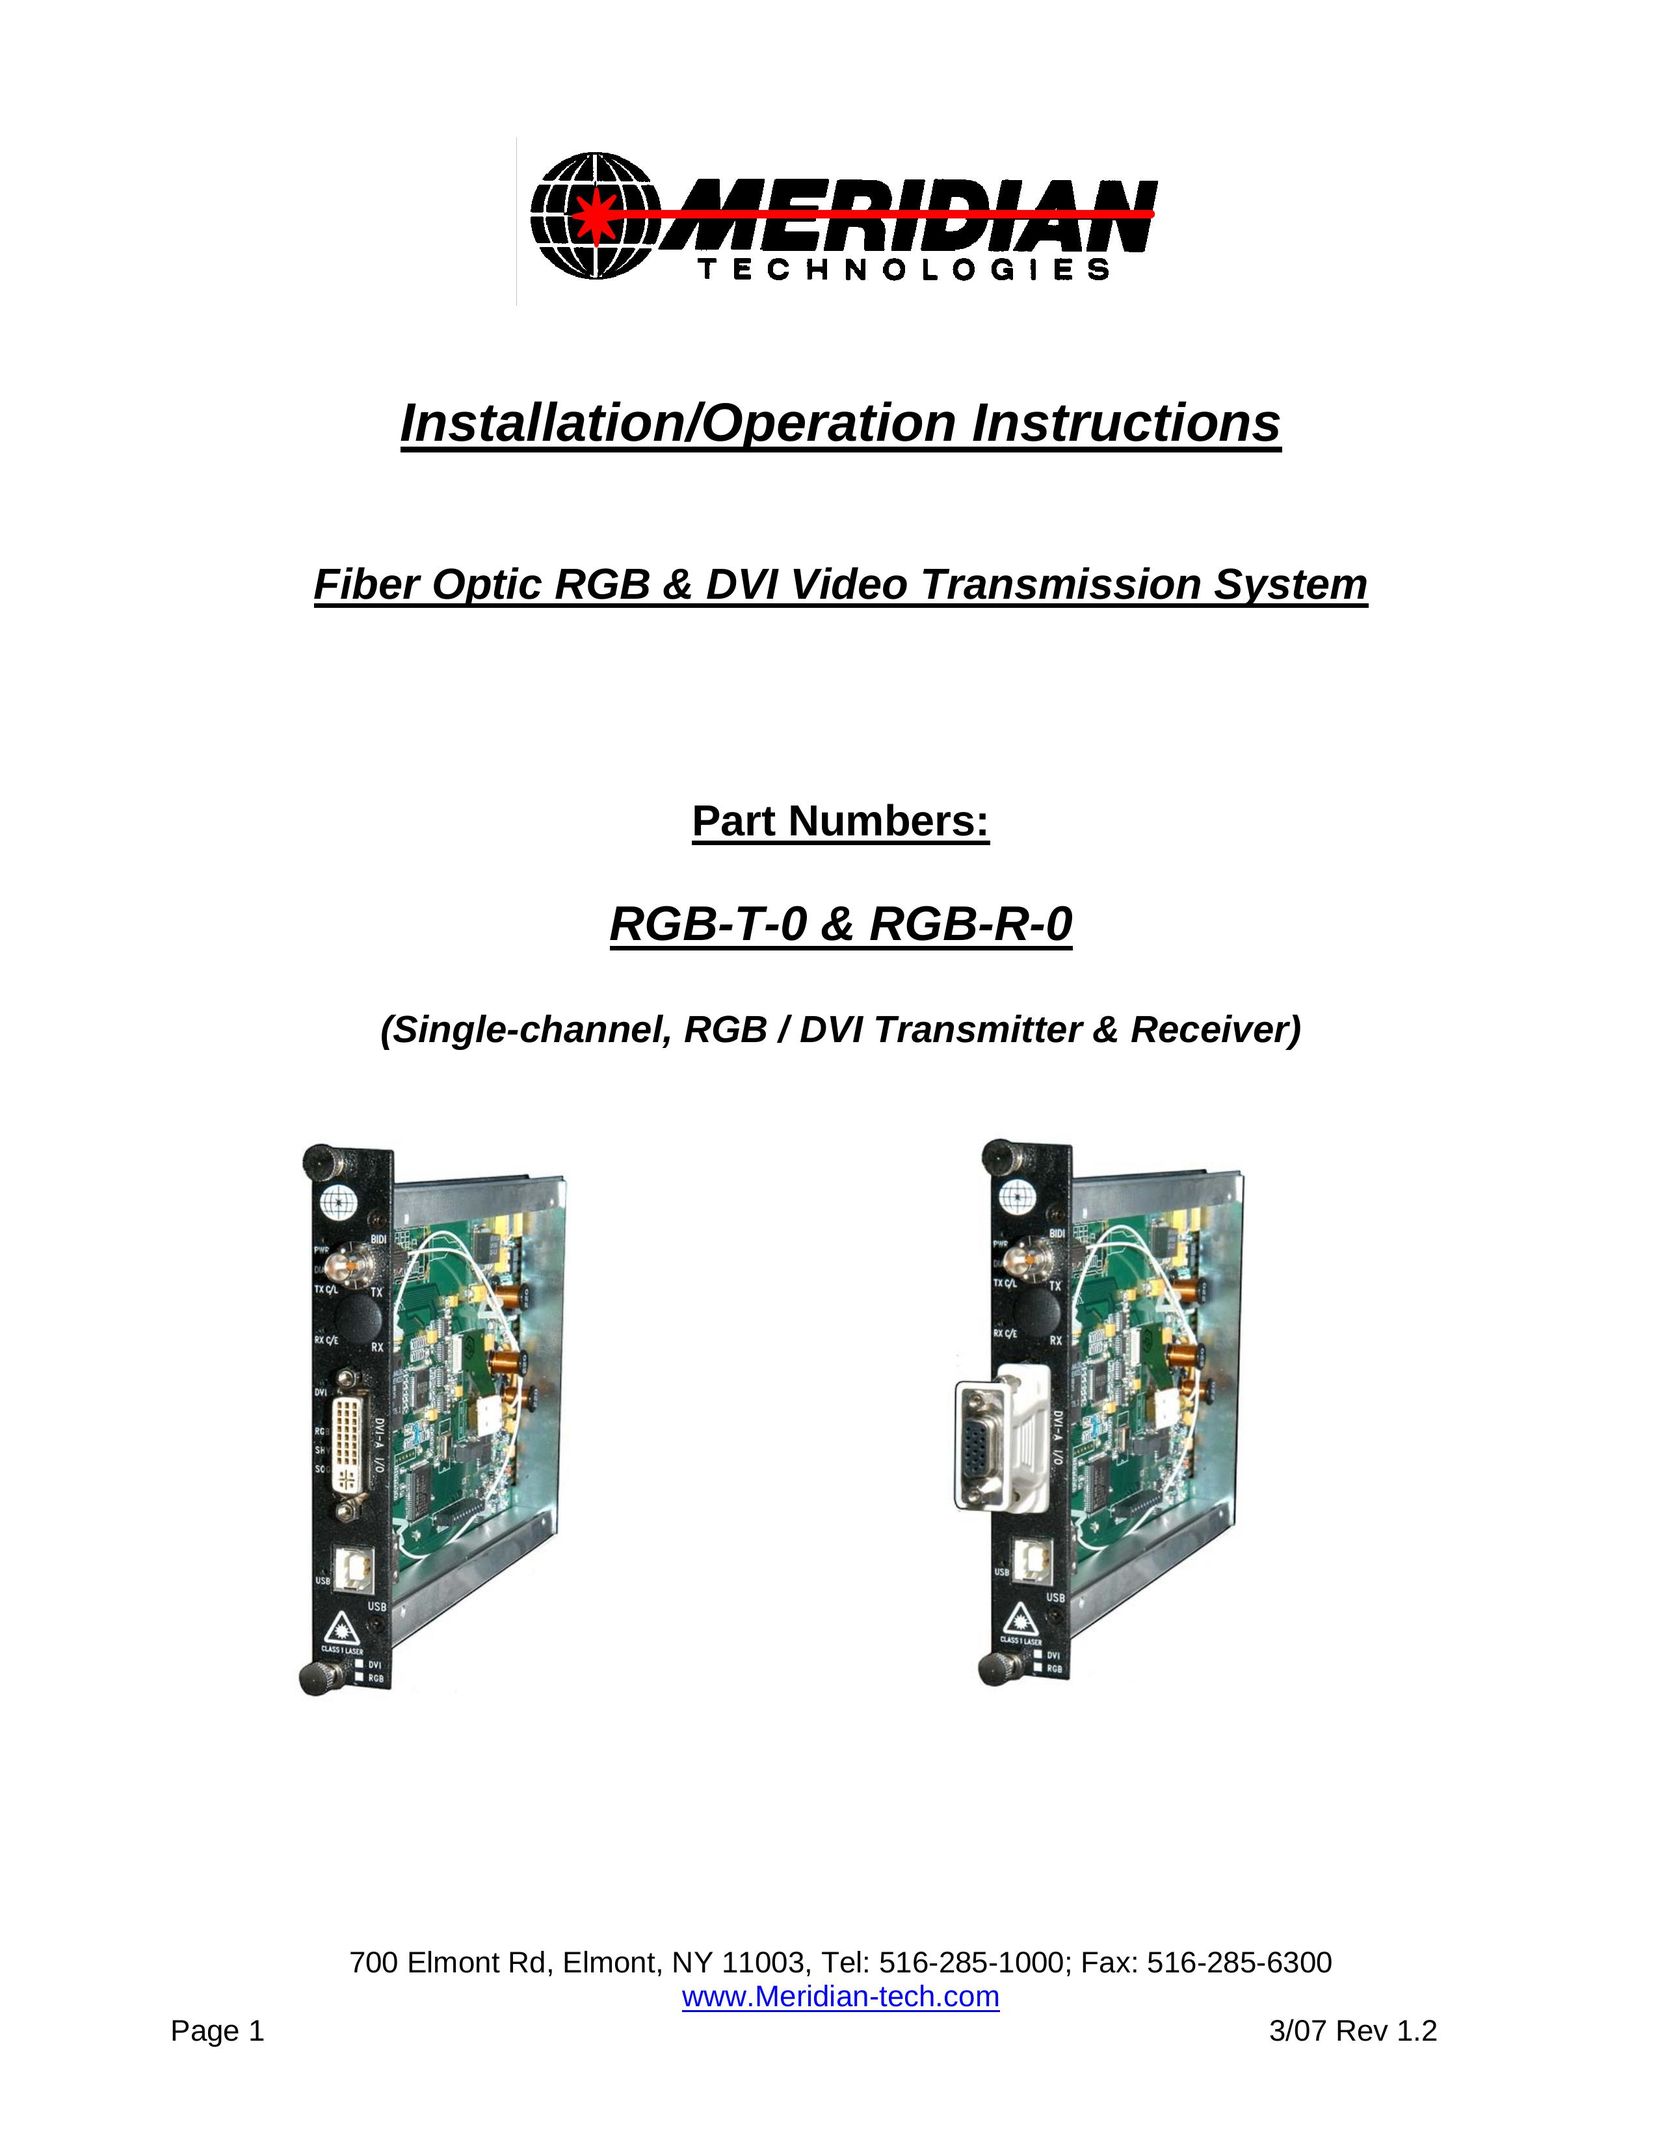 Meridian America Single--channel, RGB/DVI transmitter & Receiver Computer Hardware User Manual